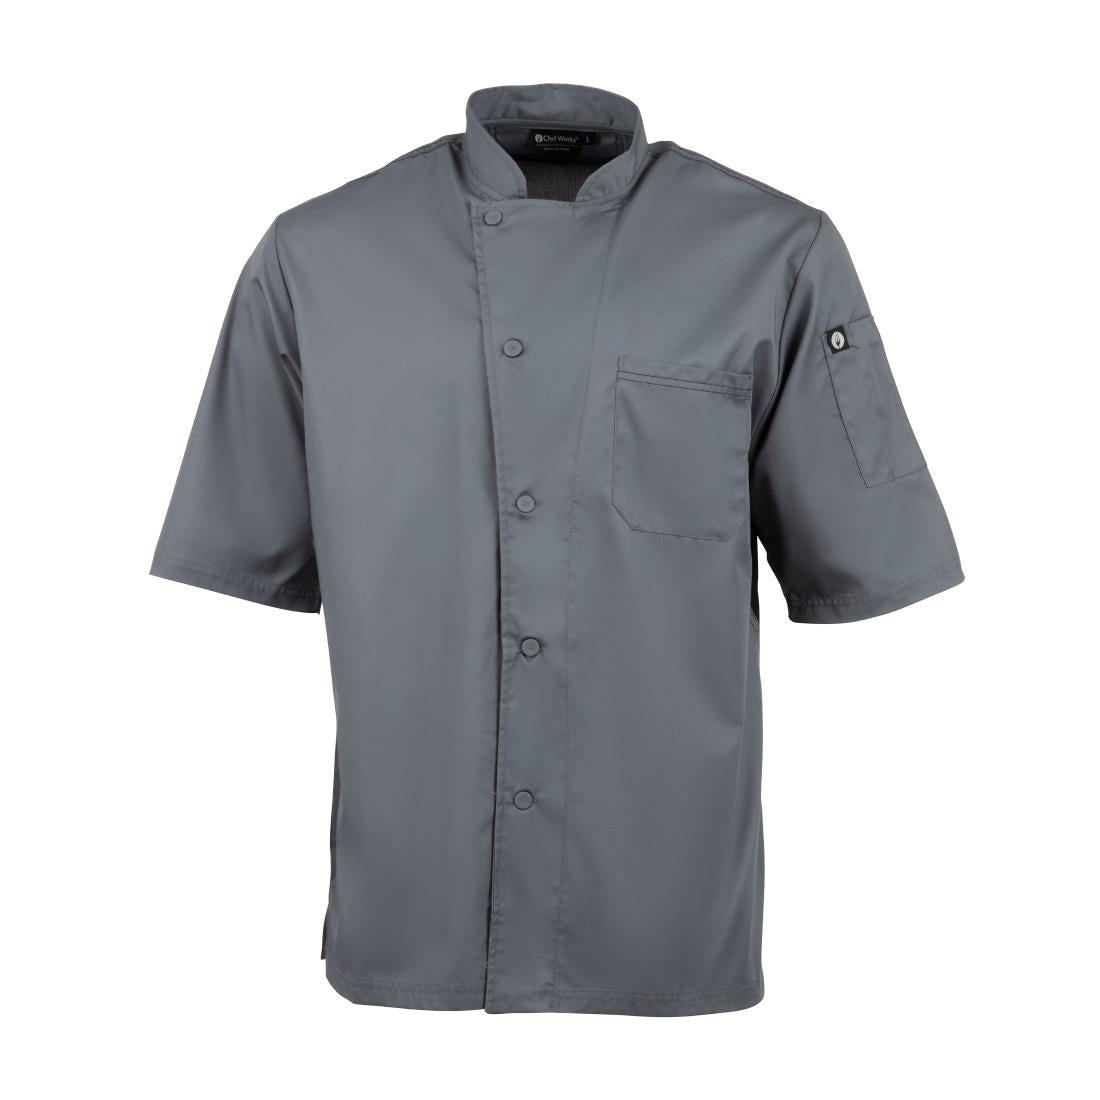 B185-L Chef Works Valais Signature Series Unisex Chefs Jacket Grey L